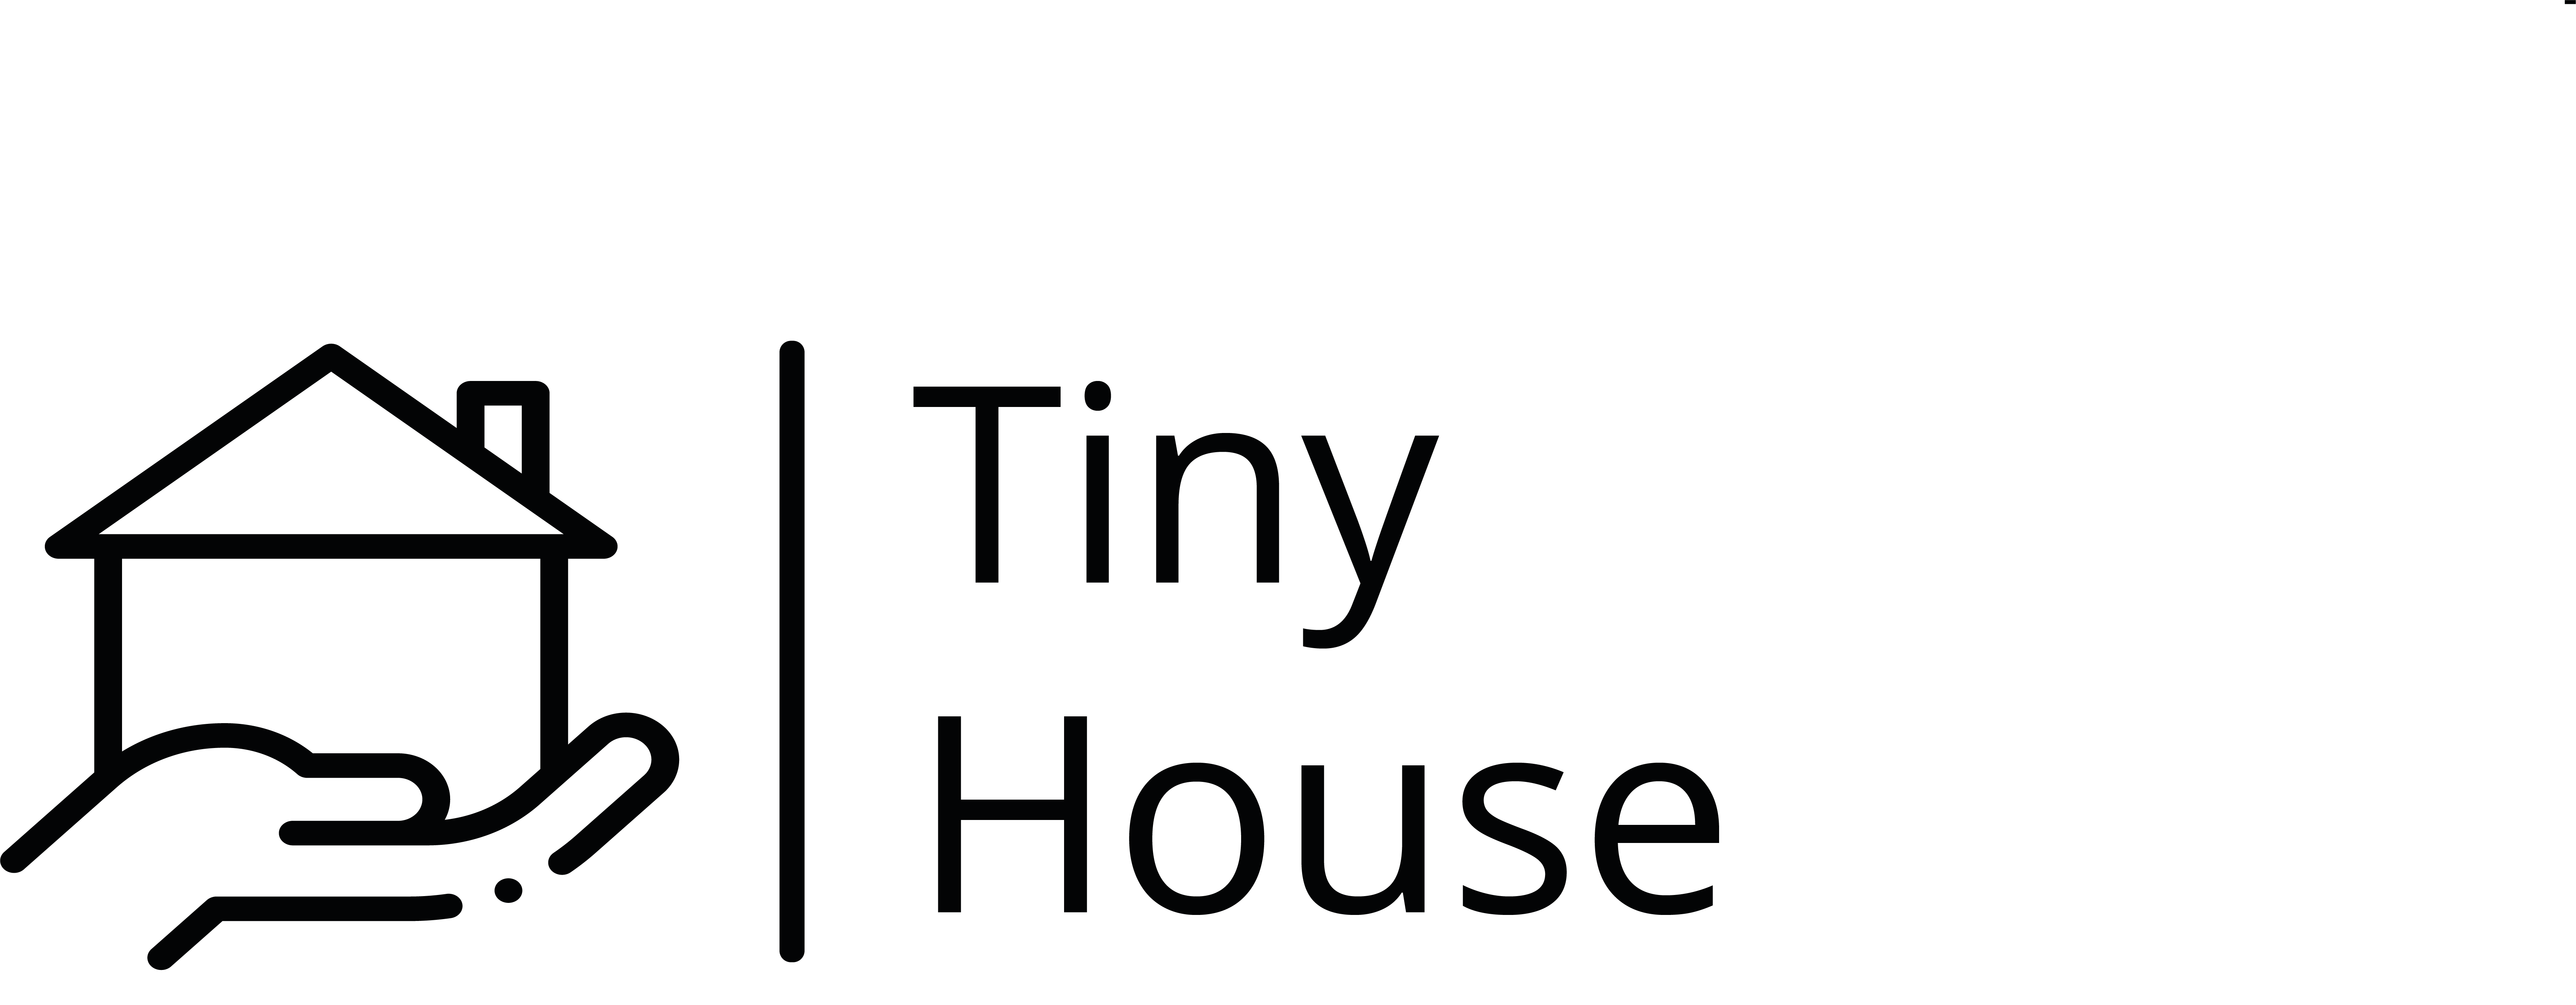 Tinyhouse